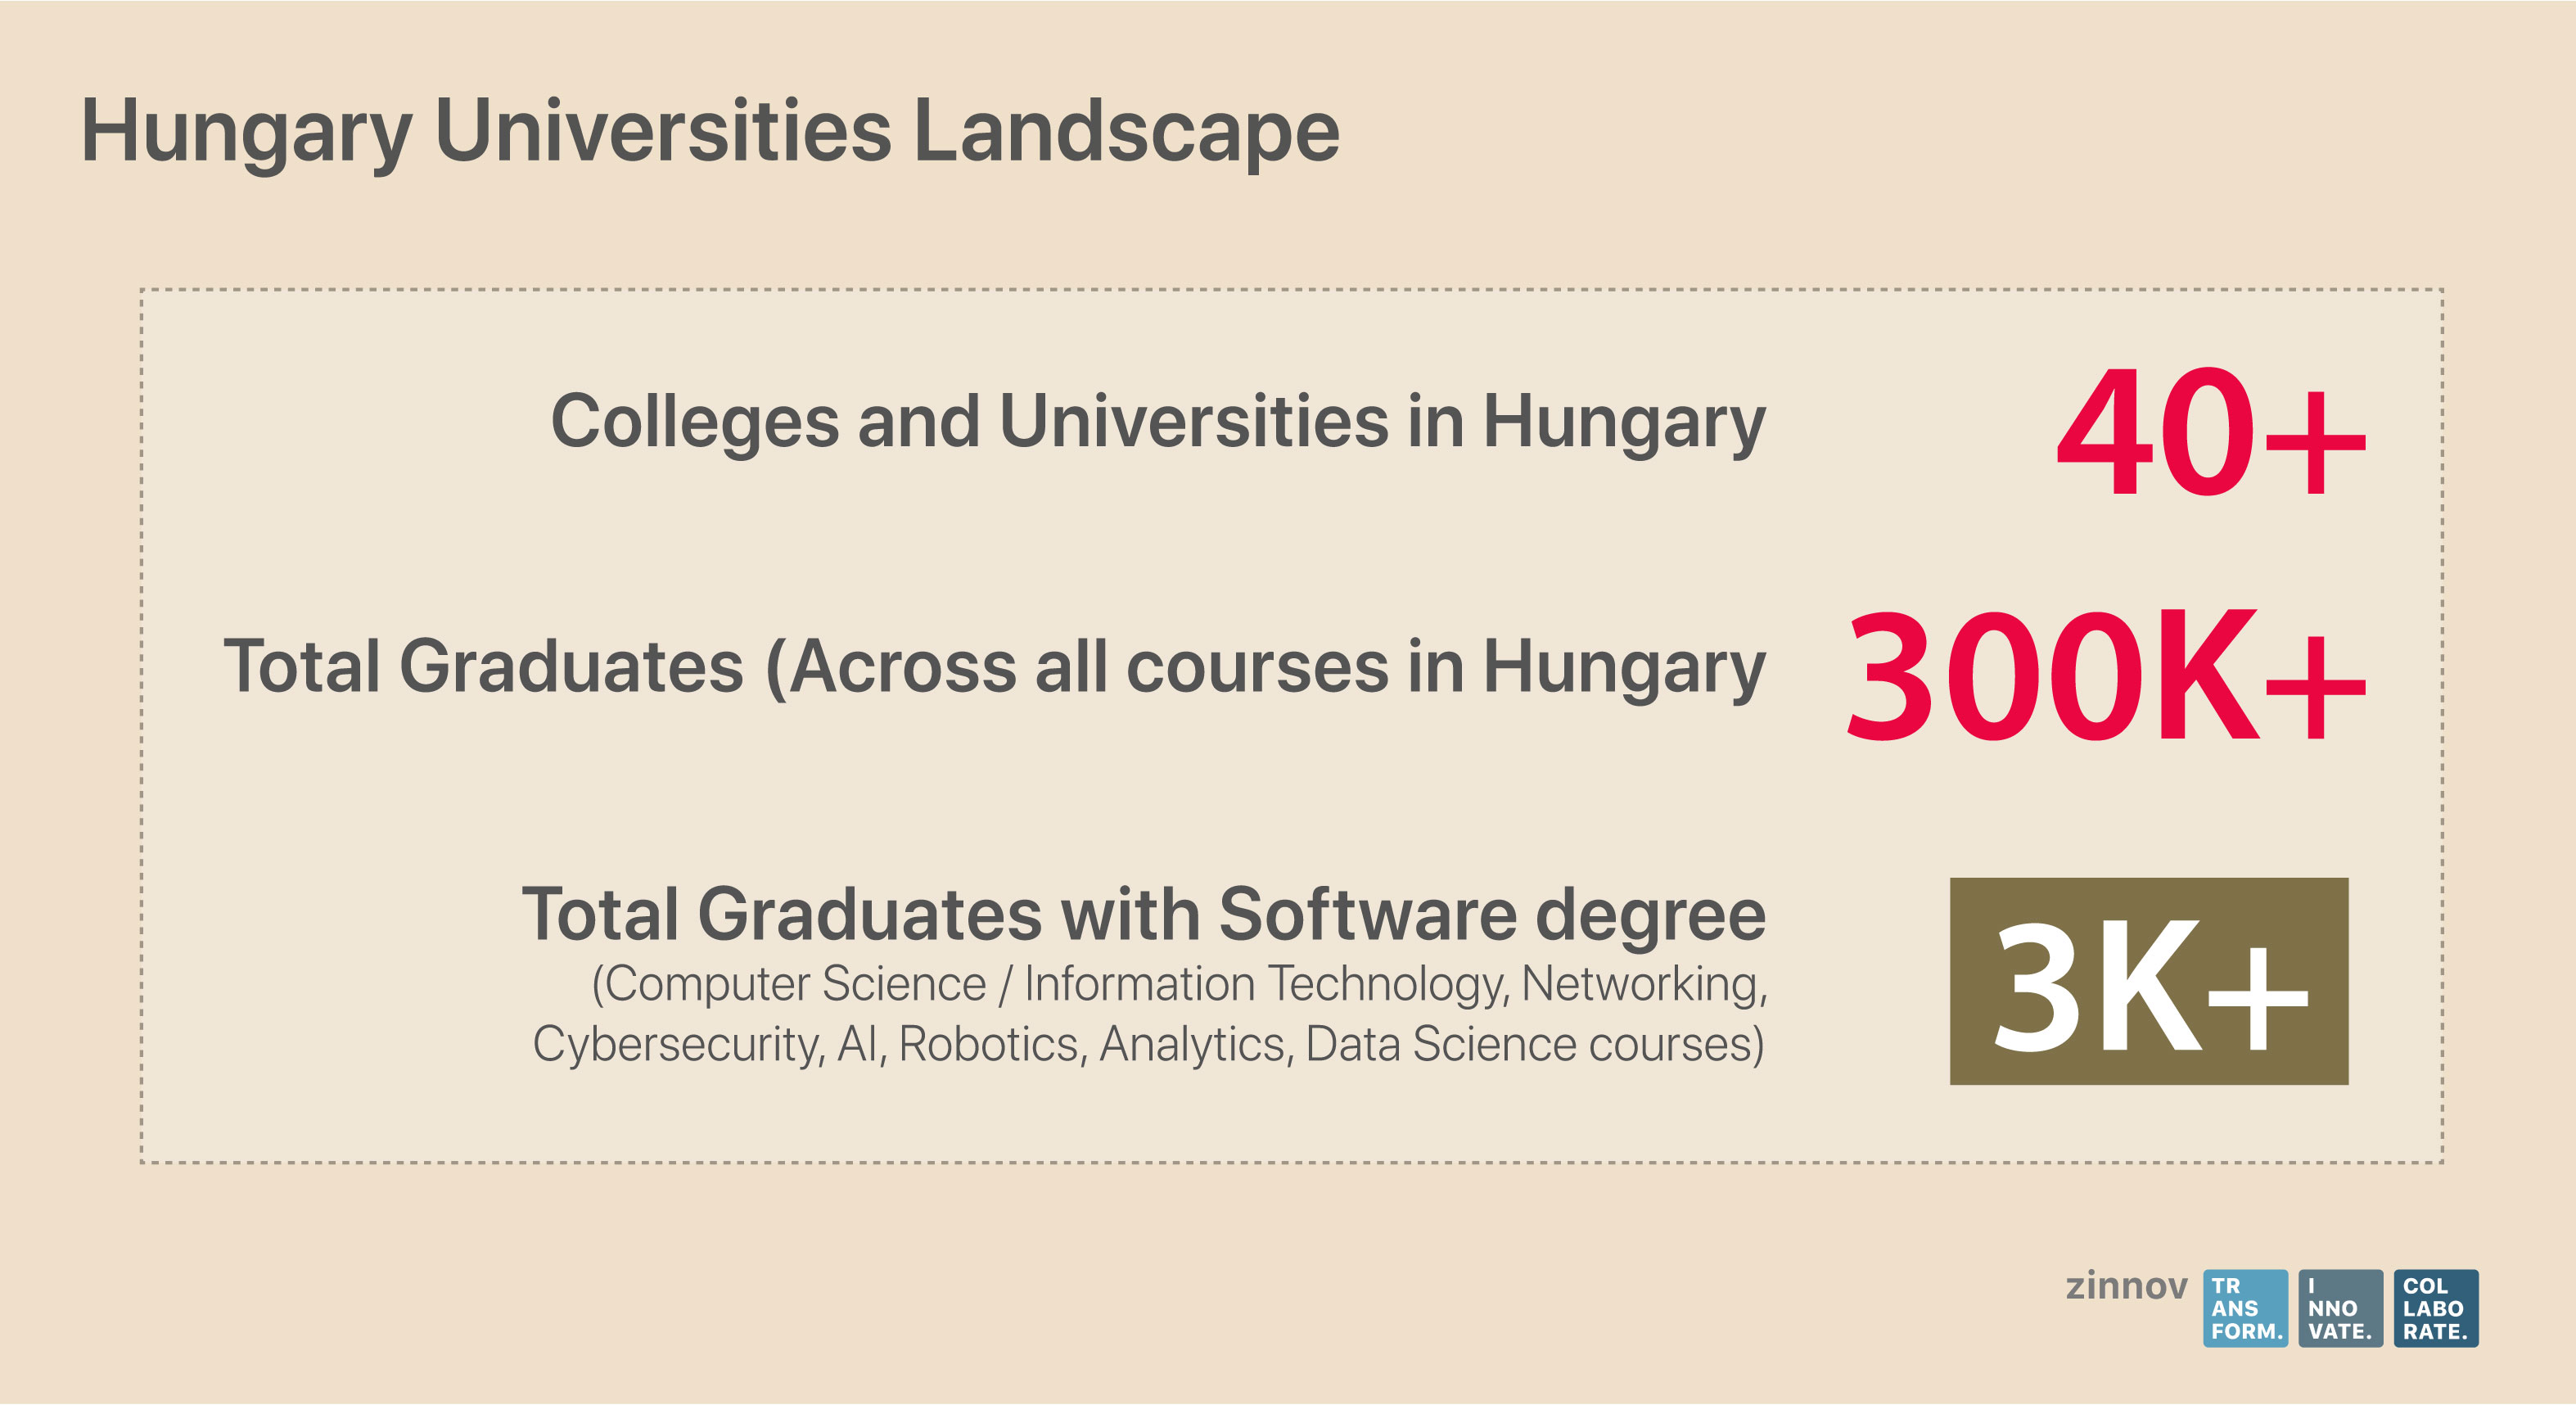 Hungary universities landscape